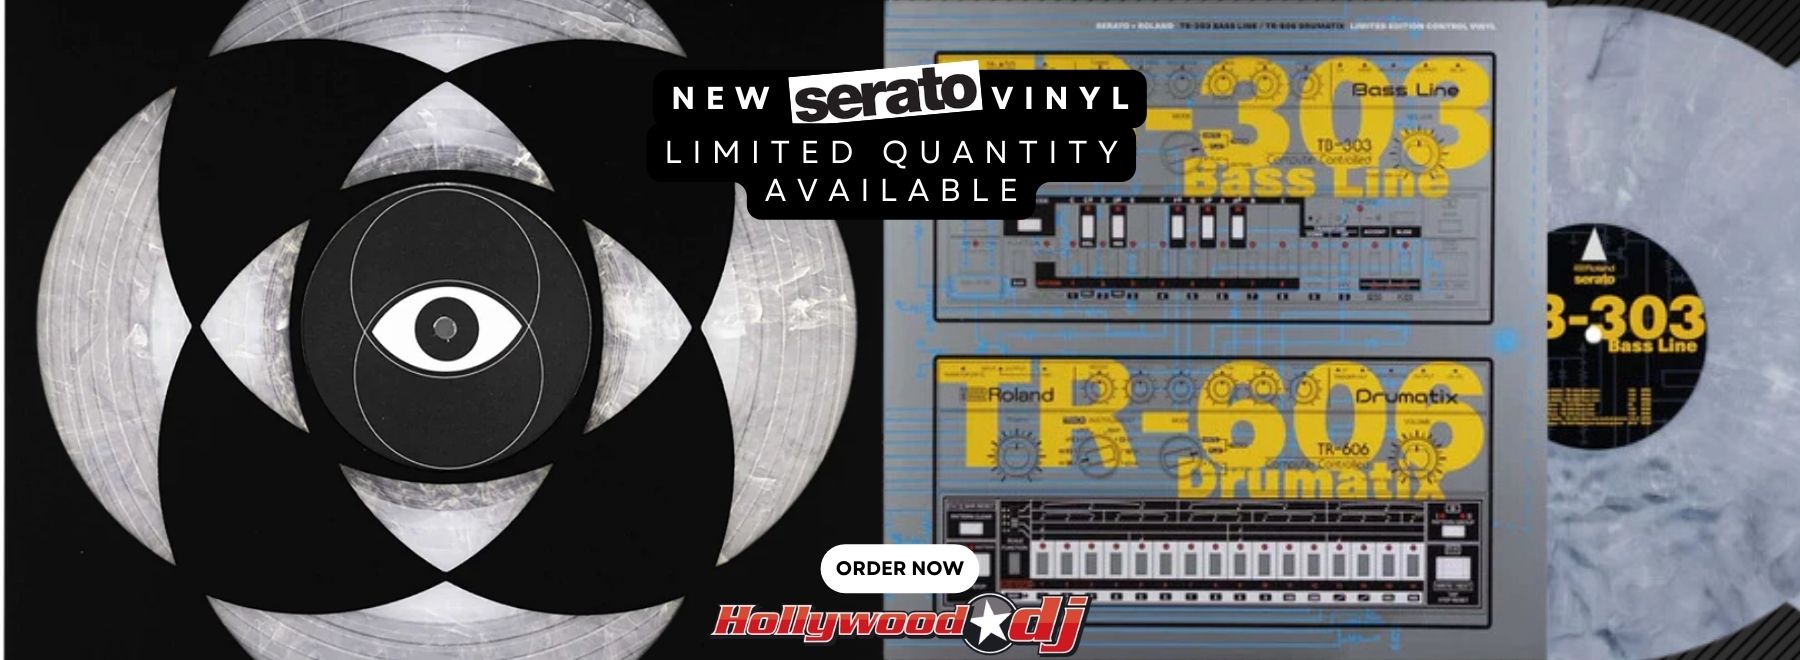 Serato Control Vinyl Sacred Geometry 5 with Roland TR303 & 606 Drumatix Vinyl